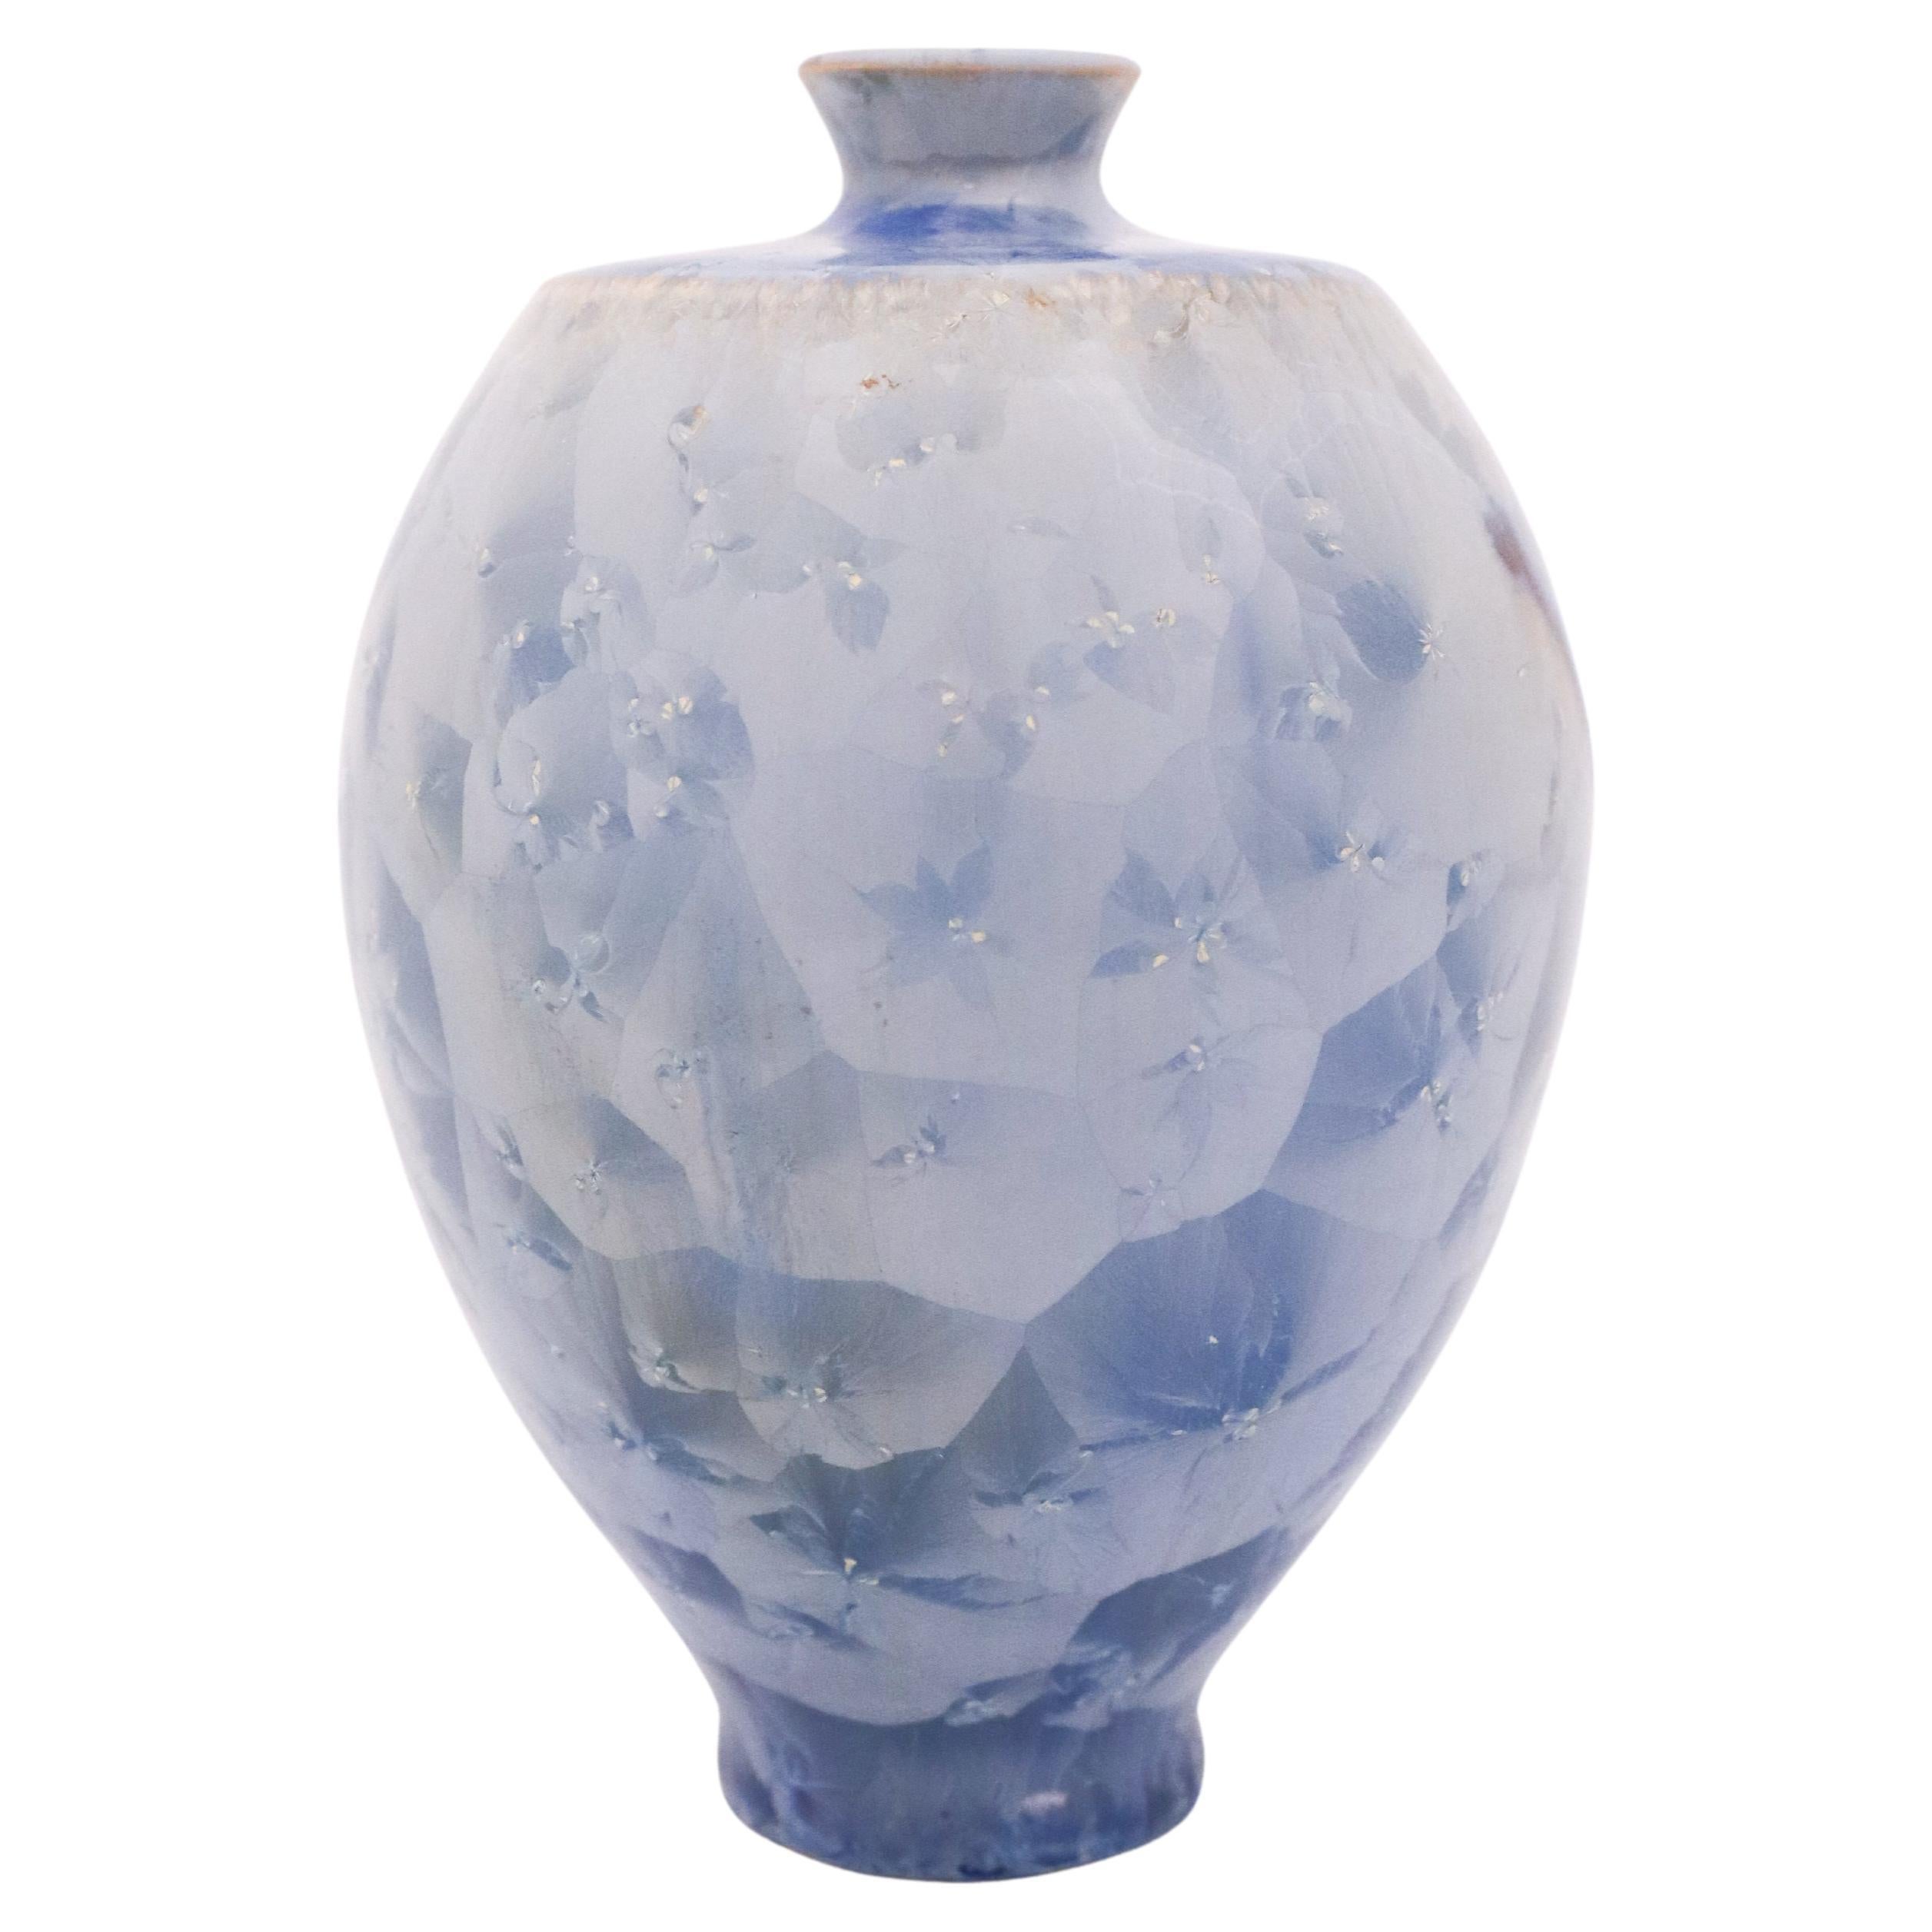 Isak Isaksson Vase, Blue Crystalline Glaze, Contemporary Swedish Ceramicist